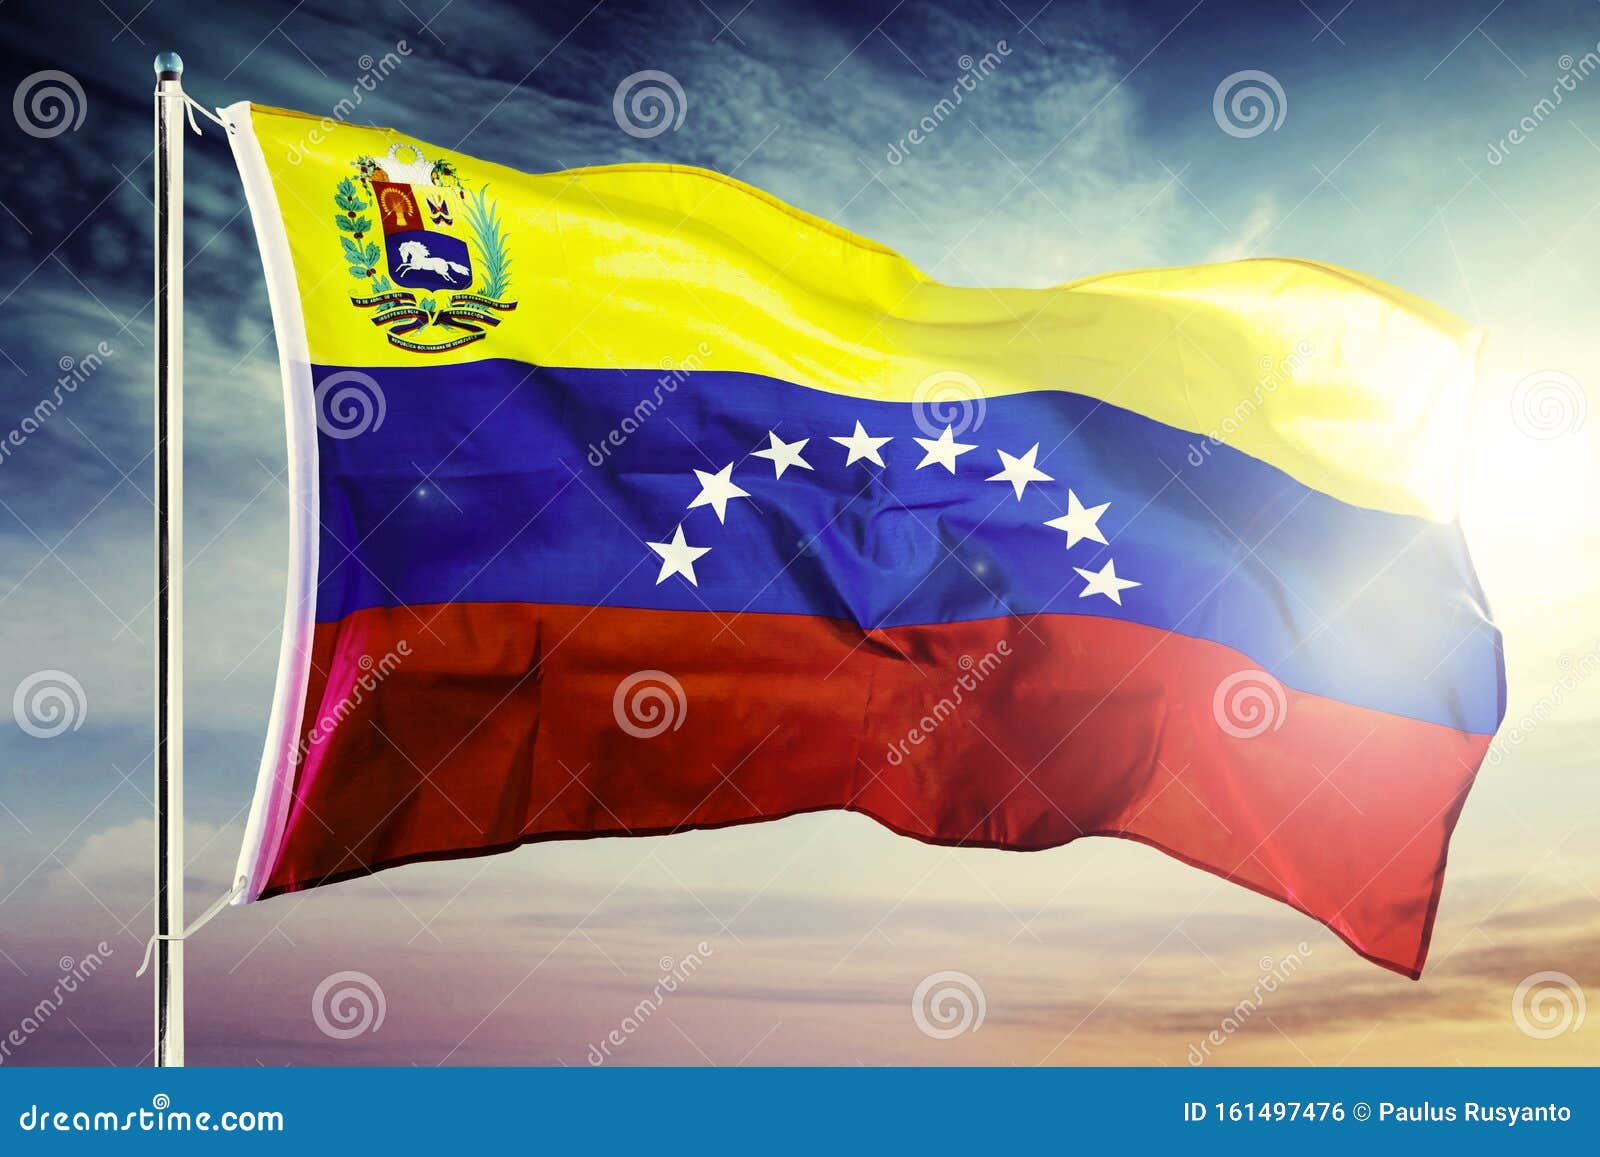 11 Ways To Reinvent Your National features of Venezuela